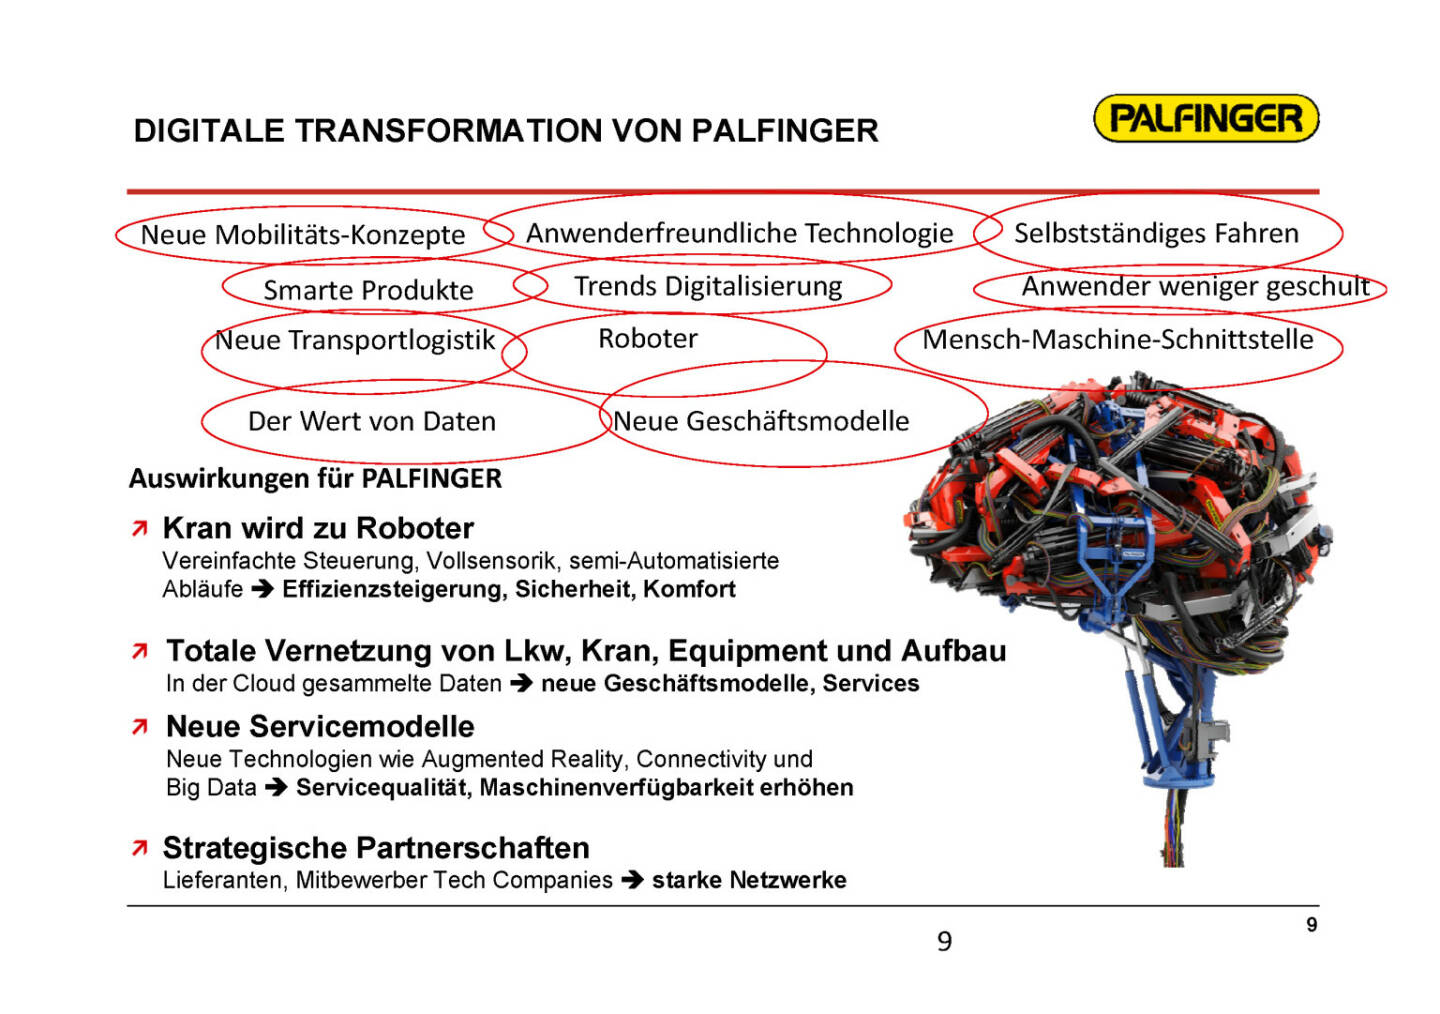 Palfinger - Digitale Transformation